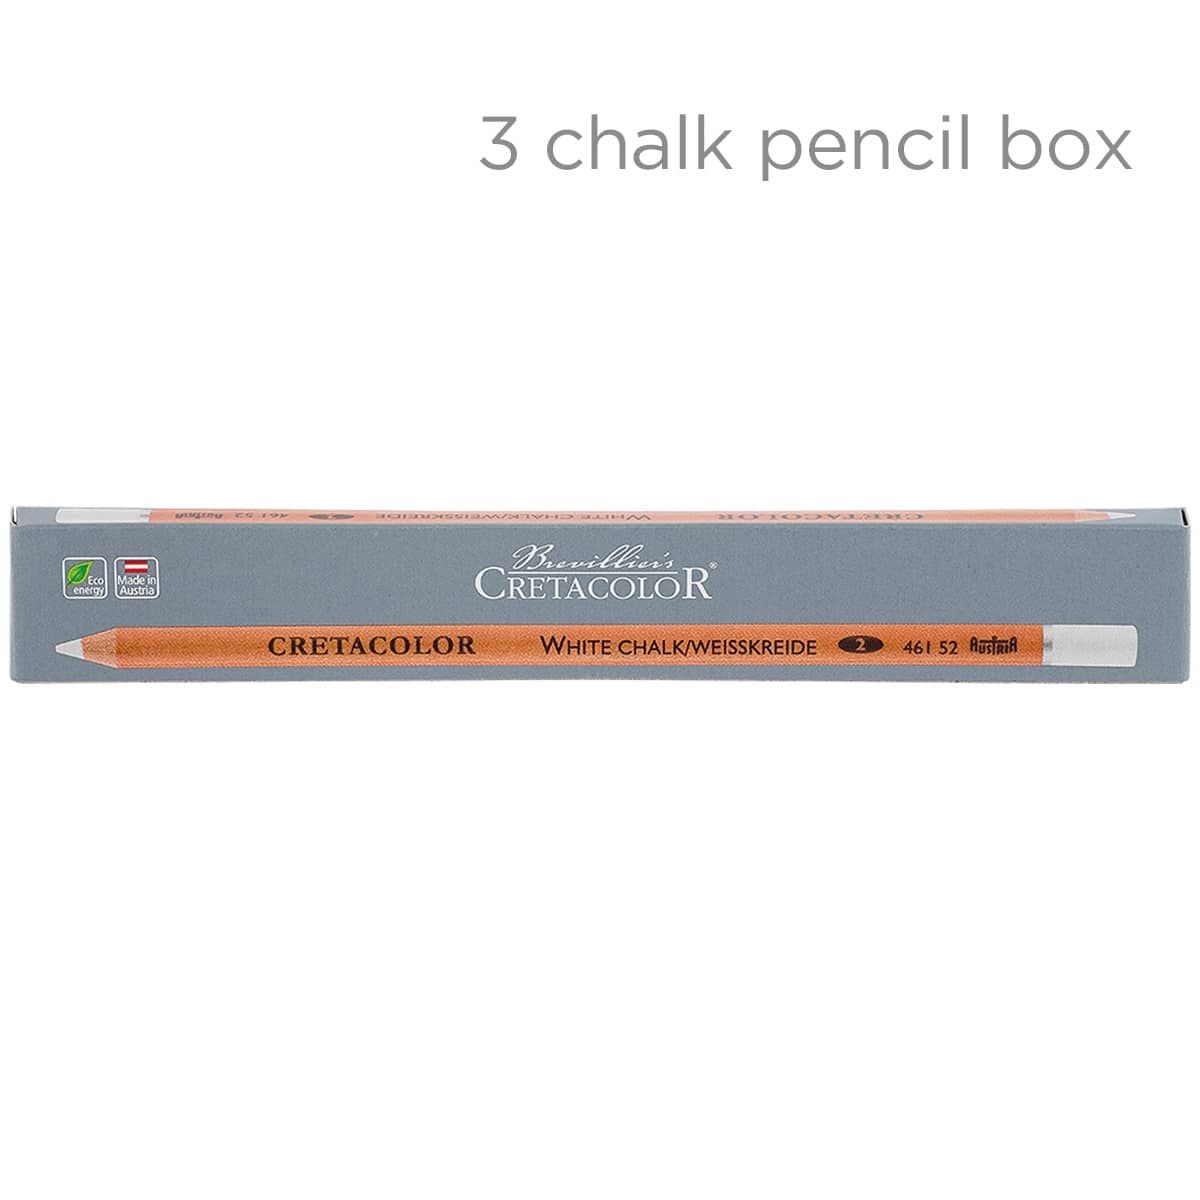 Cretacolor Chalk Pencil 3 Pack Box White Medium